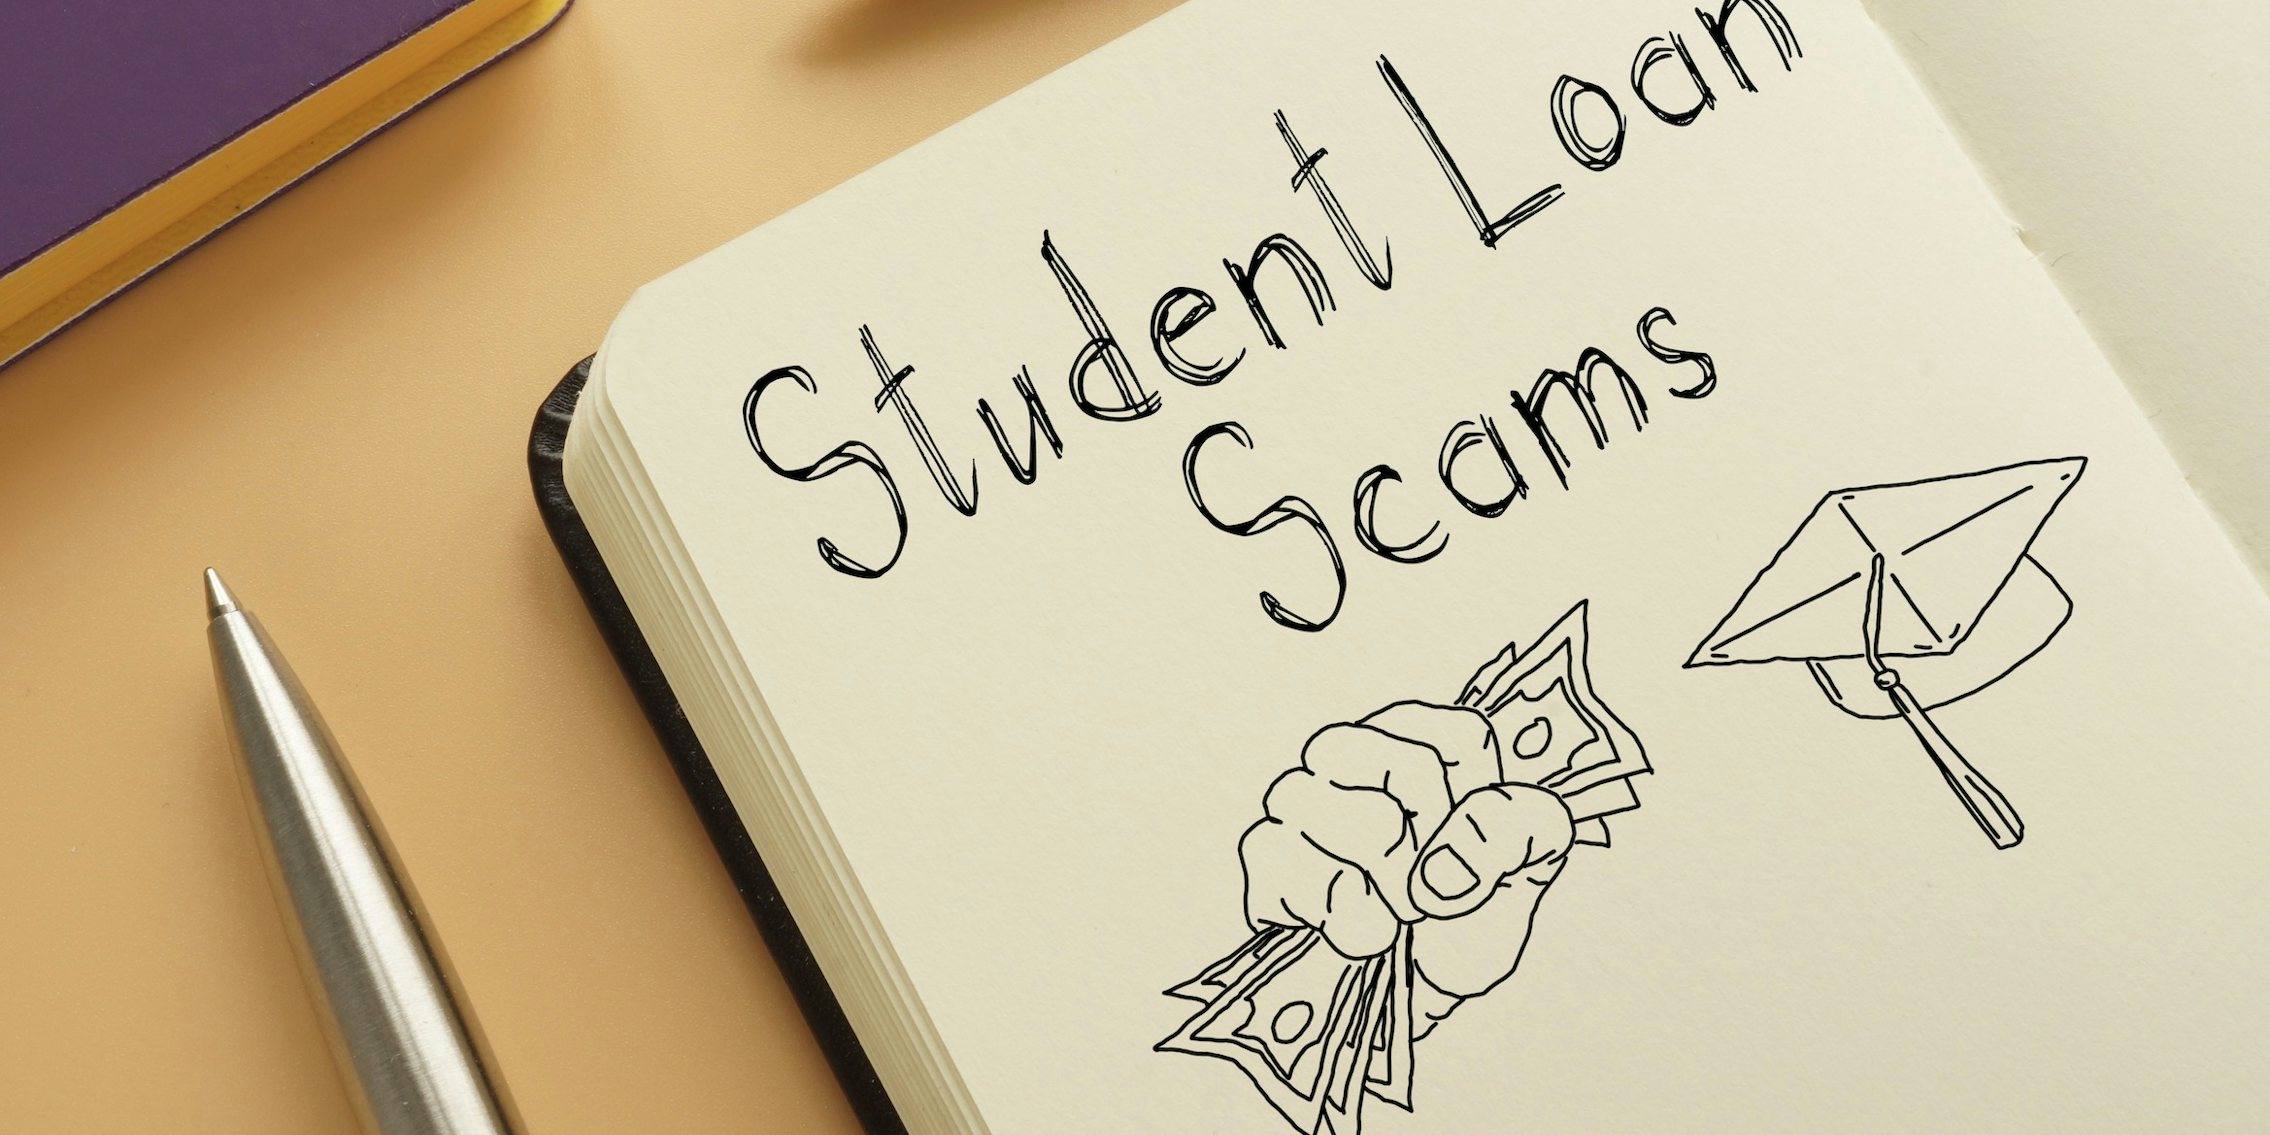 student loan debt relief scams